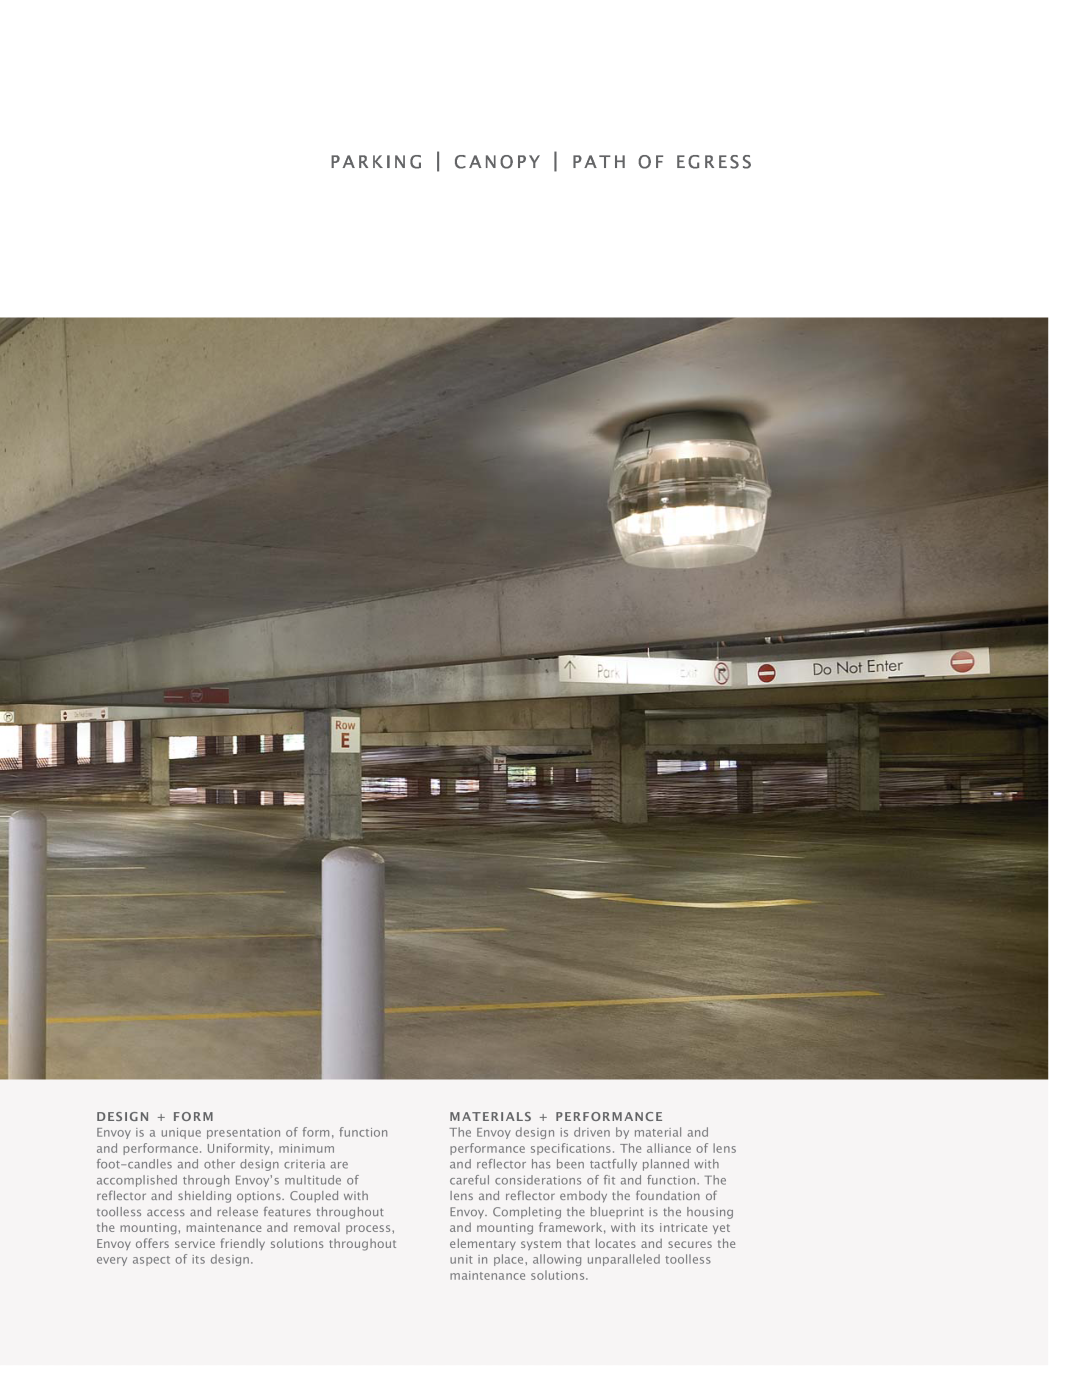 Cooper Lighting Envoy manual Parking, Canopy Path Of Egress, Design + Form, Materials + Performance 